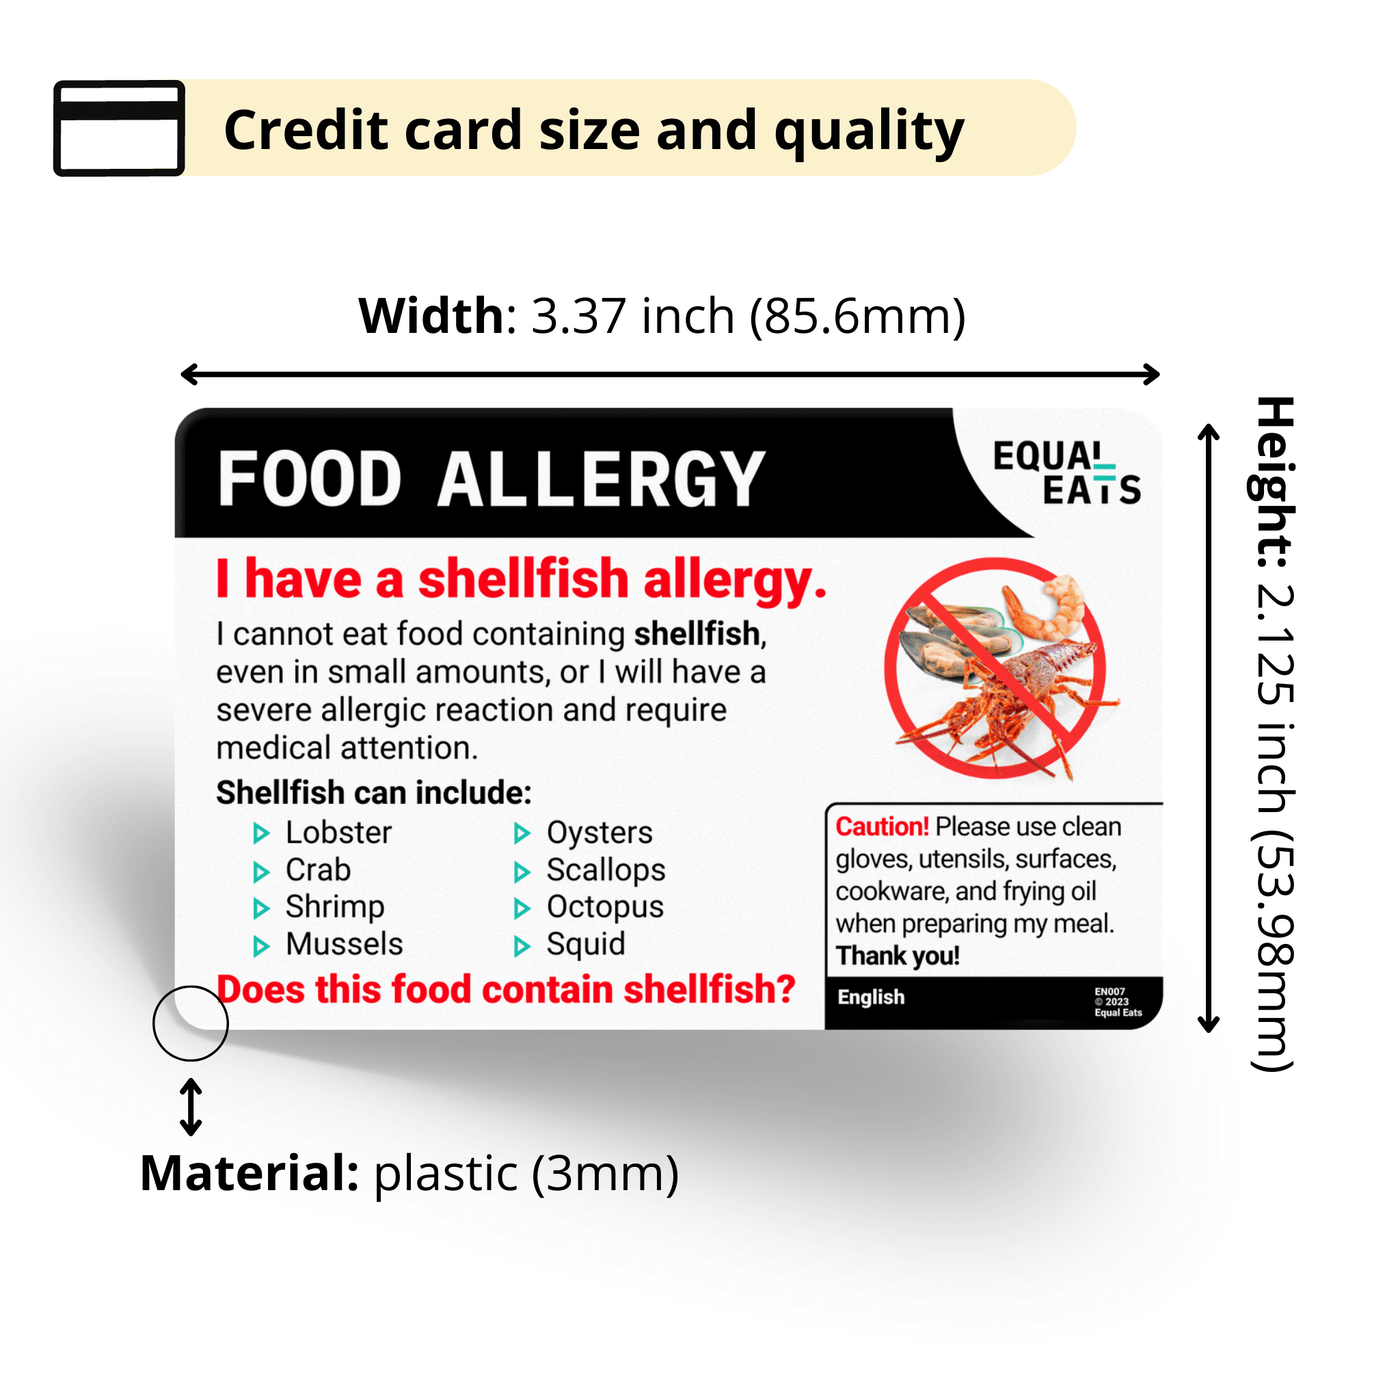 Equal Eats Allergy Translation Card for Shellfish